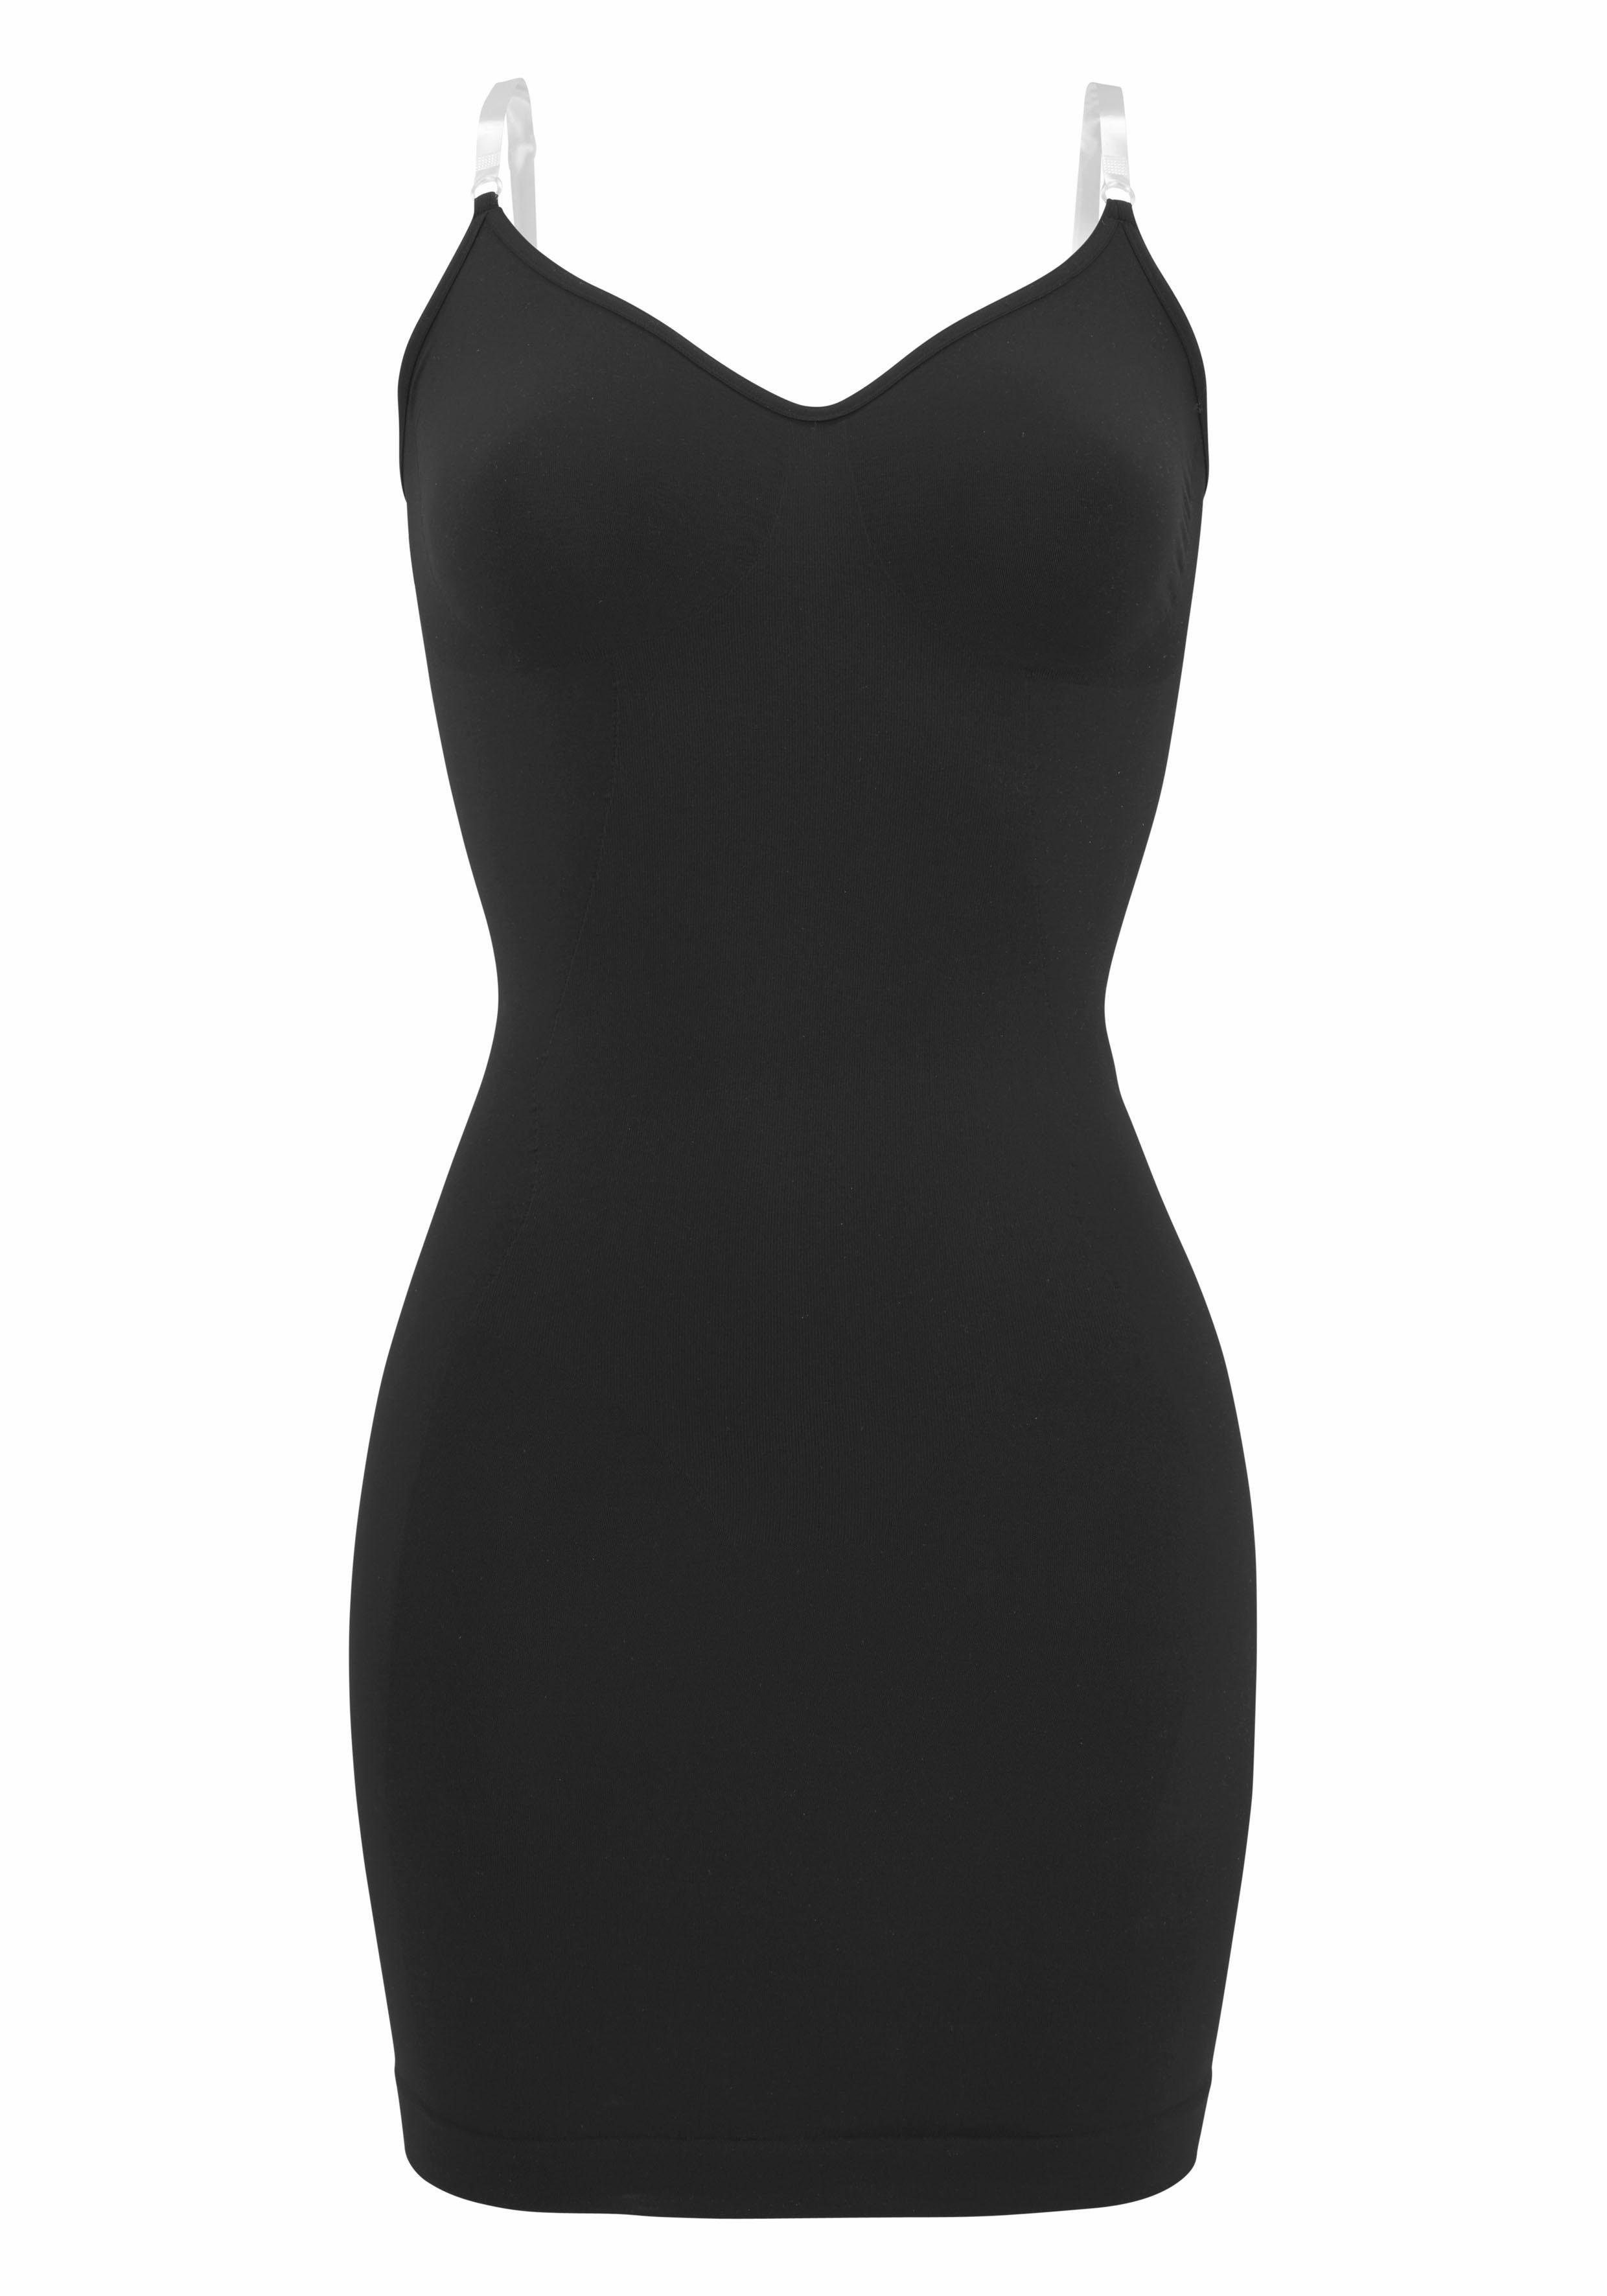 Basic transparenten schwarz Shaping-Kleid Dessous SEAMLESS mit Trägern, LASCANA